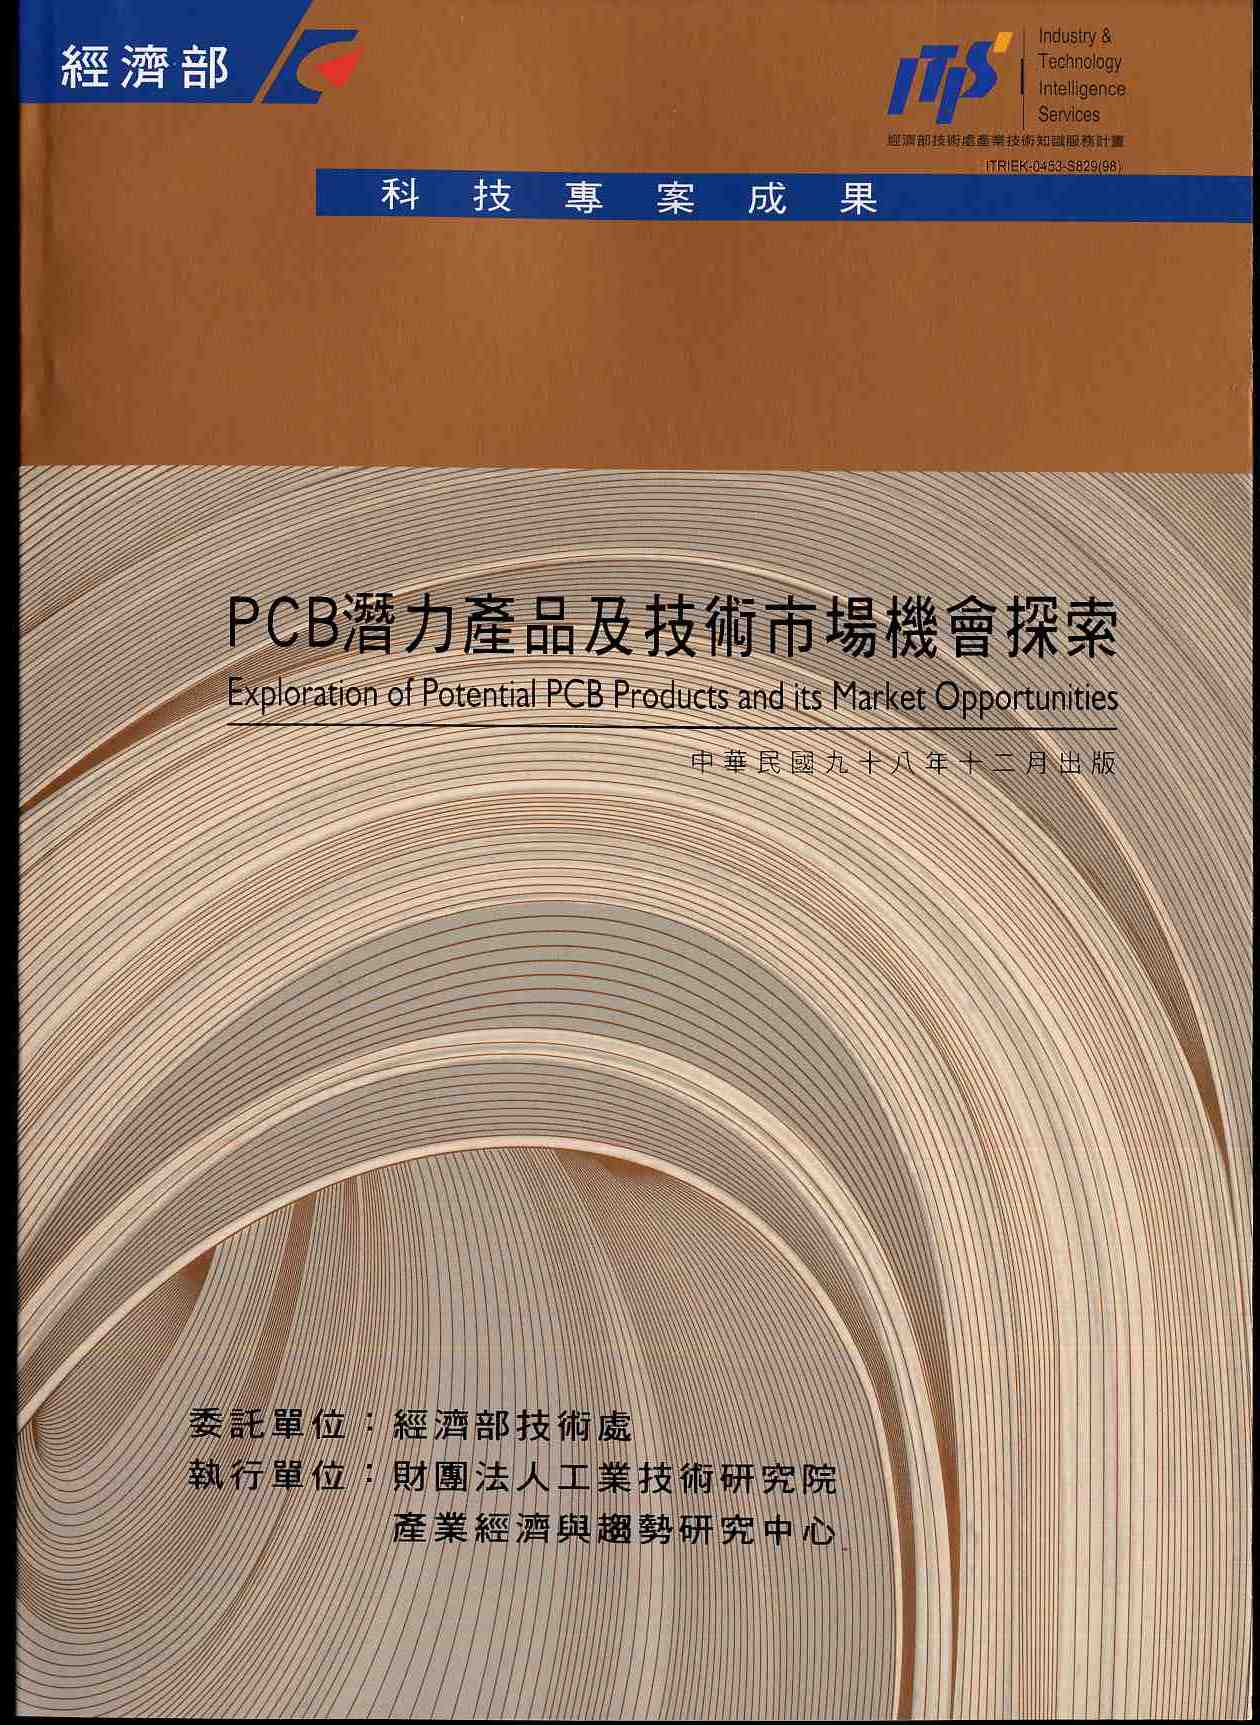 PCB潛力產品及技術市場機會探索